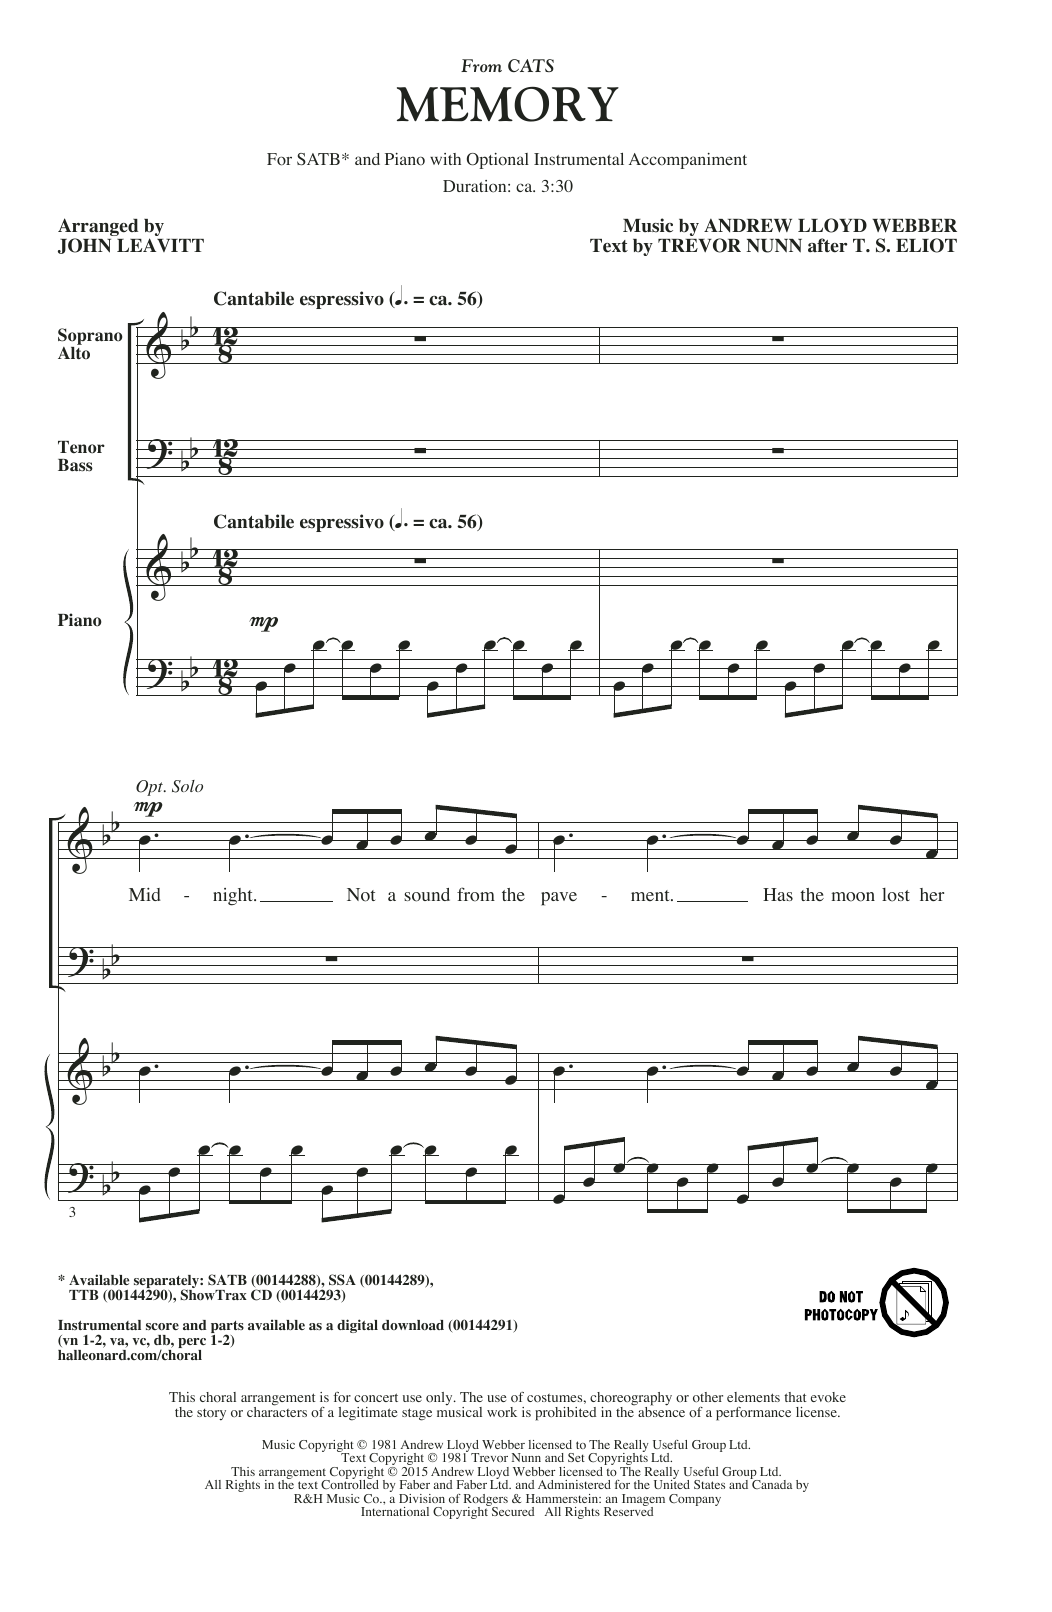 Download Andrew Lloyd Webber Memory (arr. John Leavitt) Sheet Music and learn how to play SSA PDF digital score in minutes